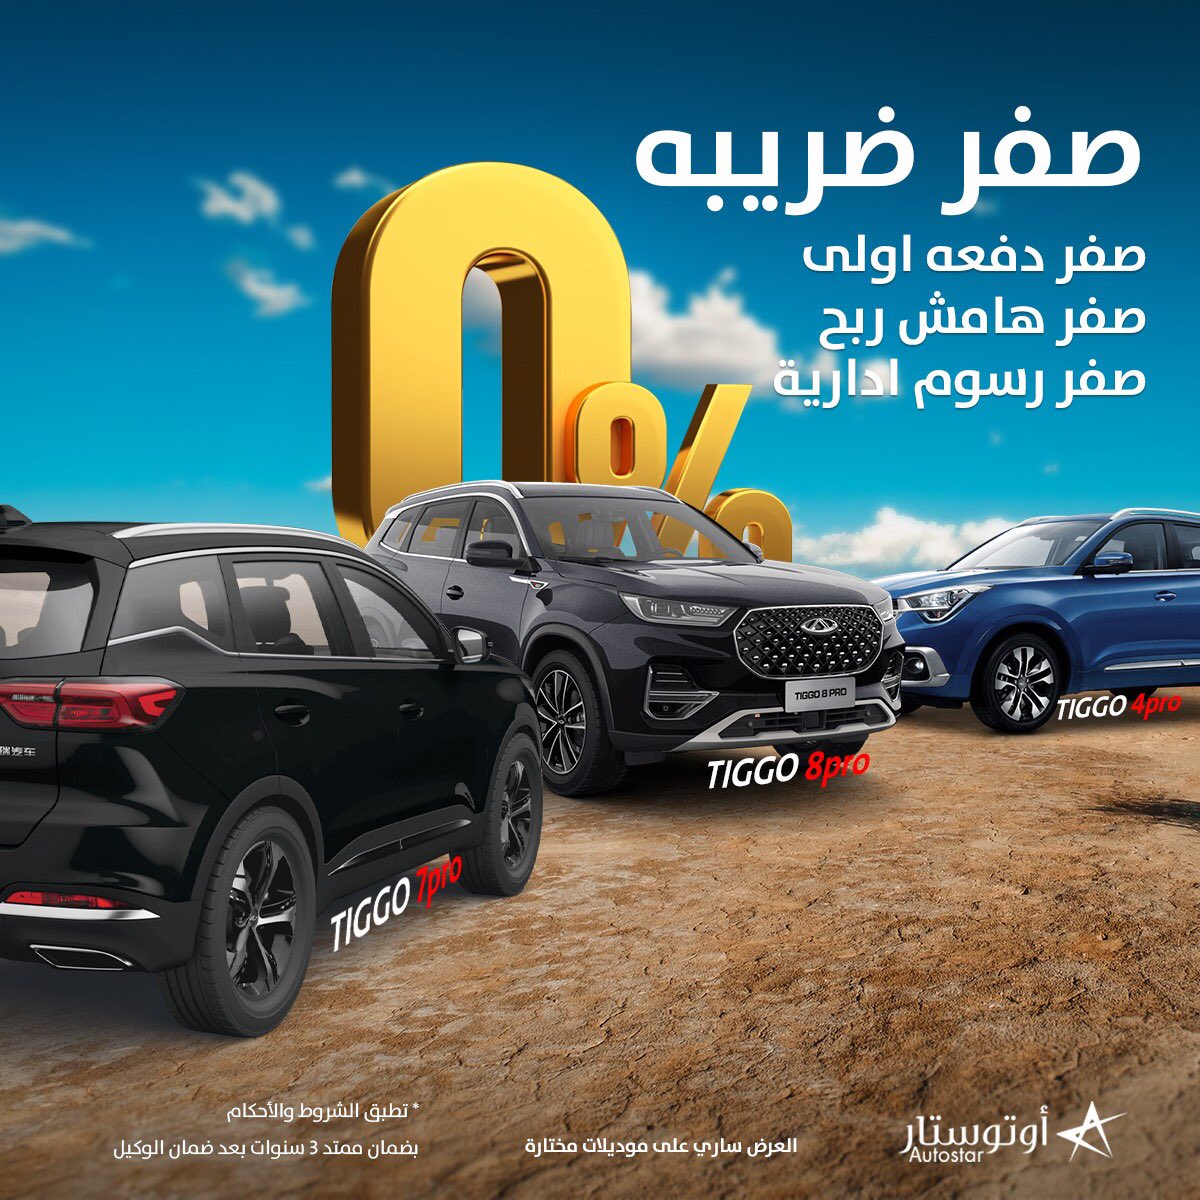 FP97DAfWYAAzPFT - عروض السيارات رمضان 2022 : عروض اوتوستار علي سيارات شيري